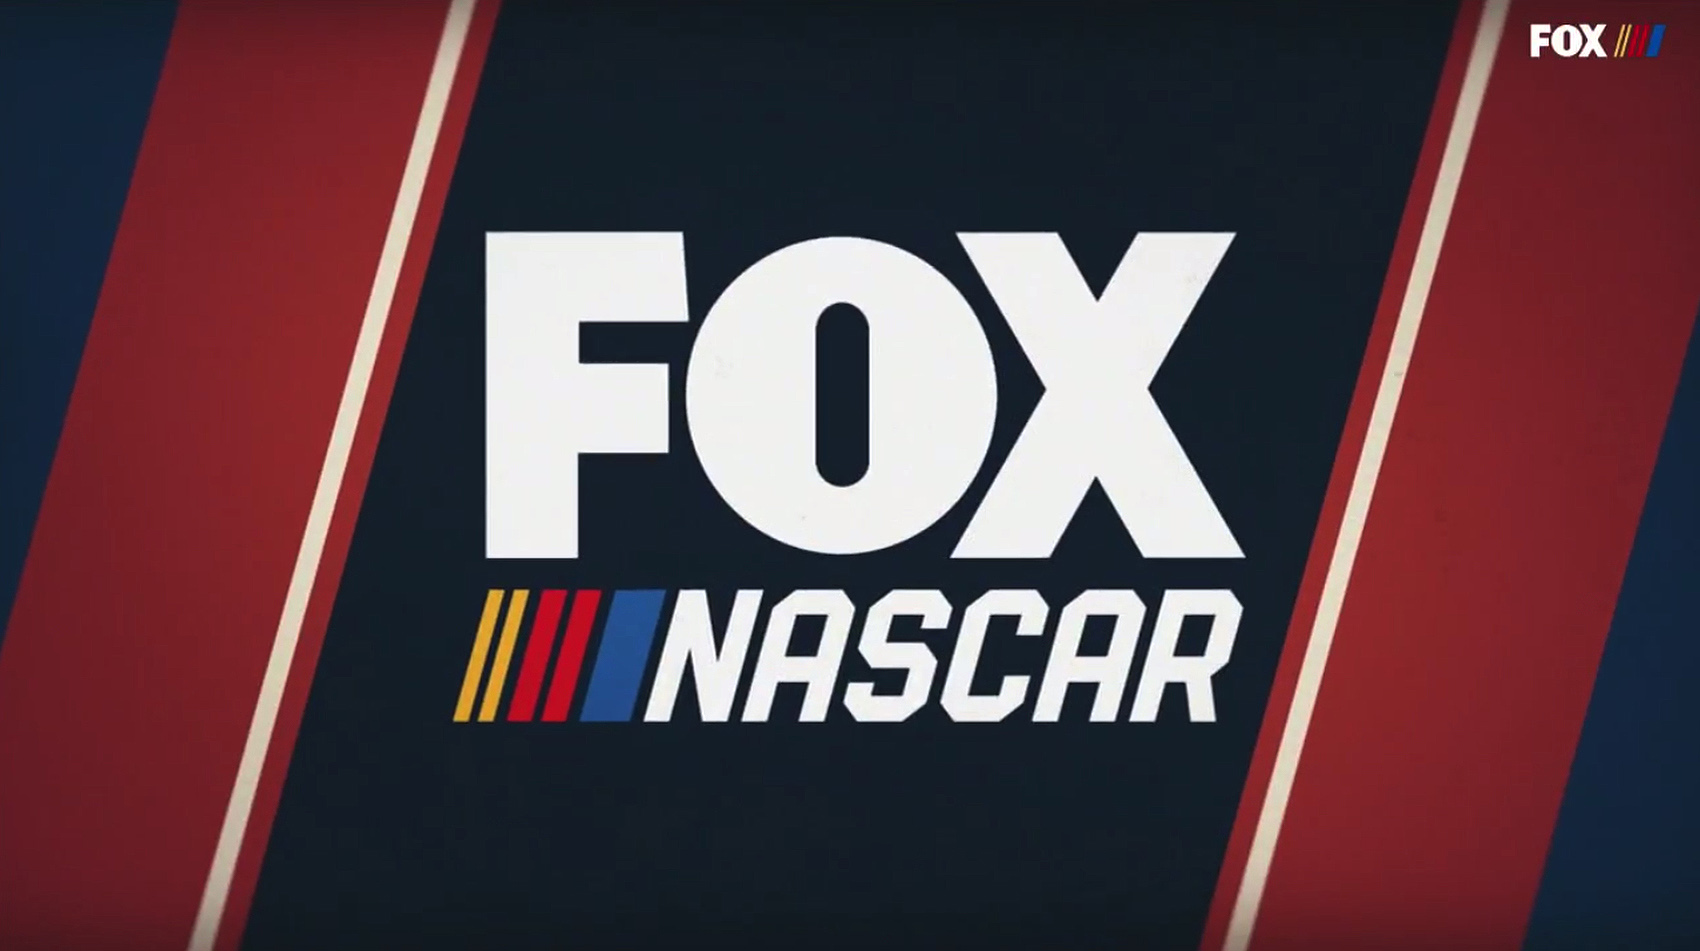 NCS_NASCAR-FOX-2019-BROADCAST-DESIGN_035